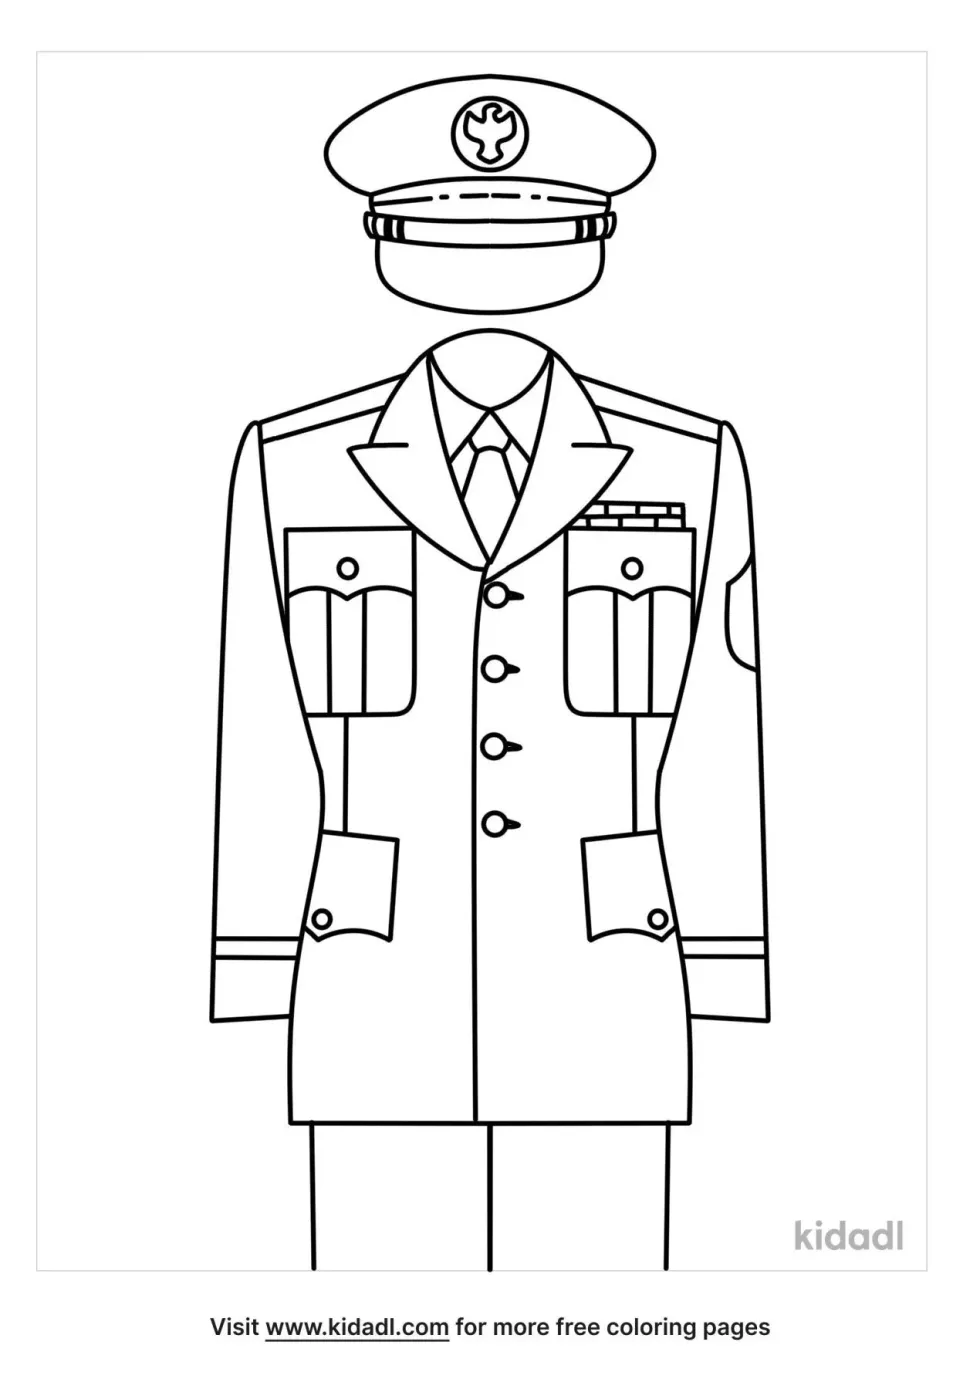 Us Army Uniform Coloring Page